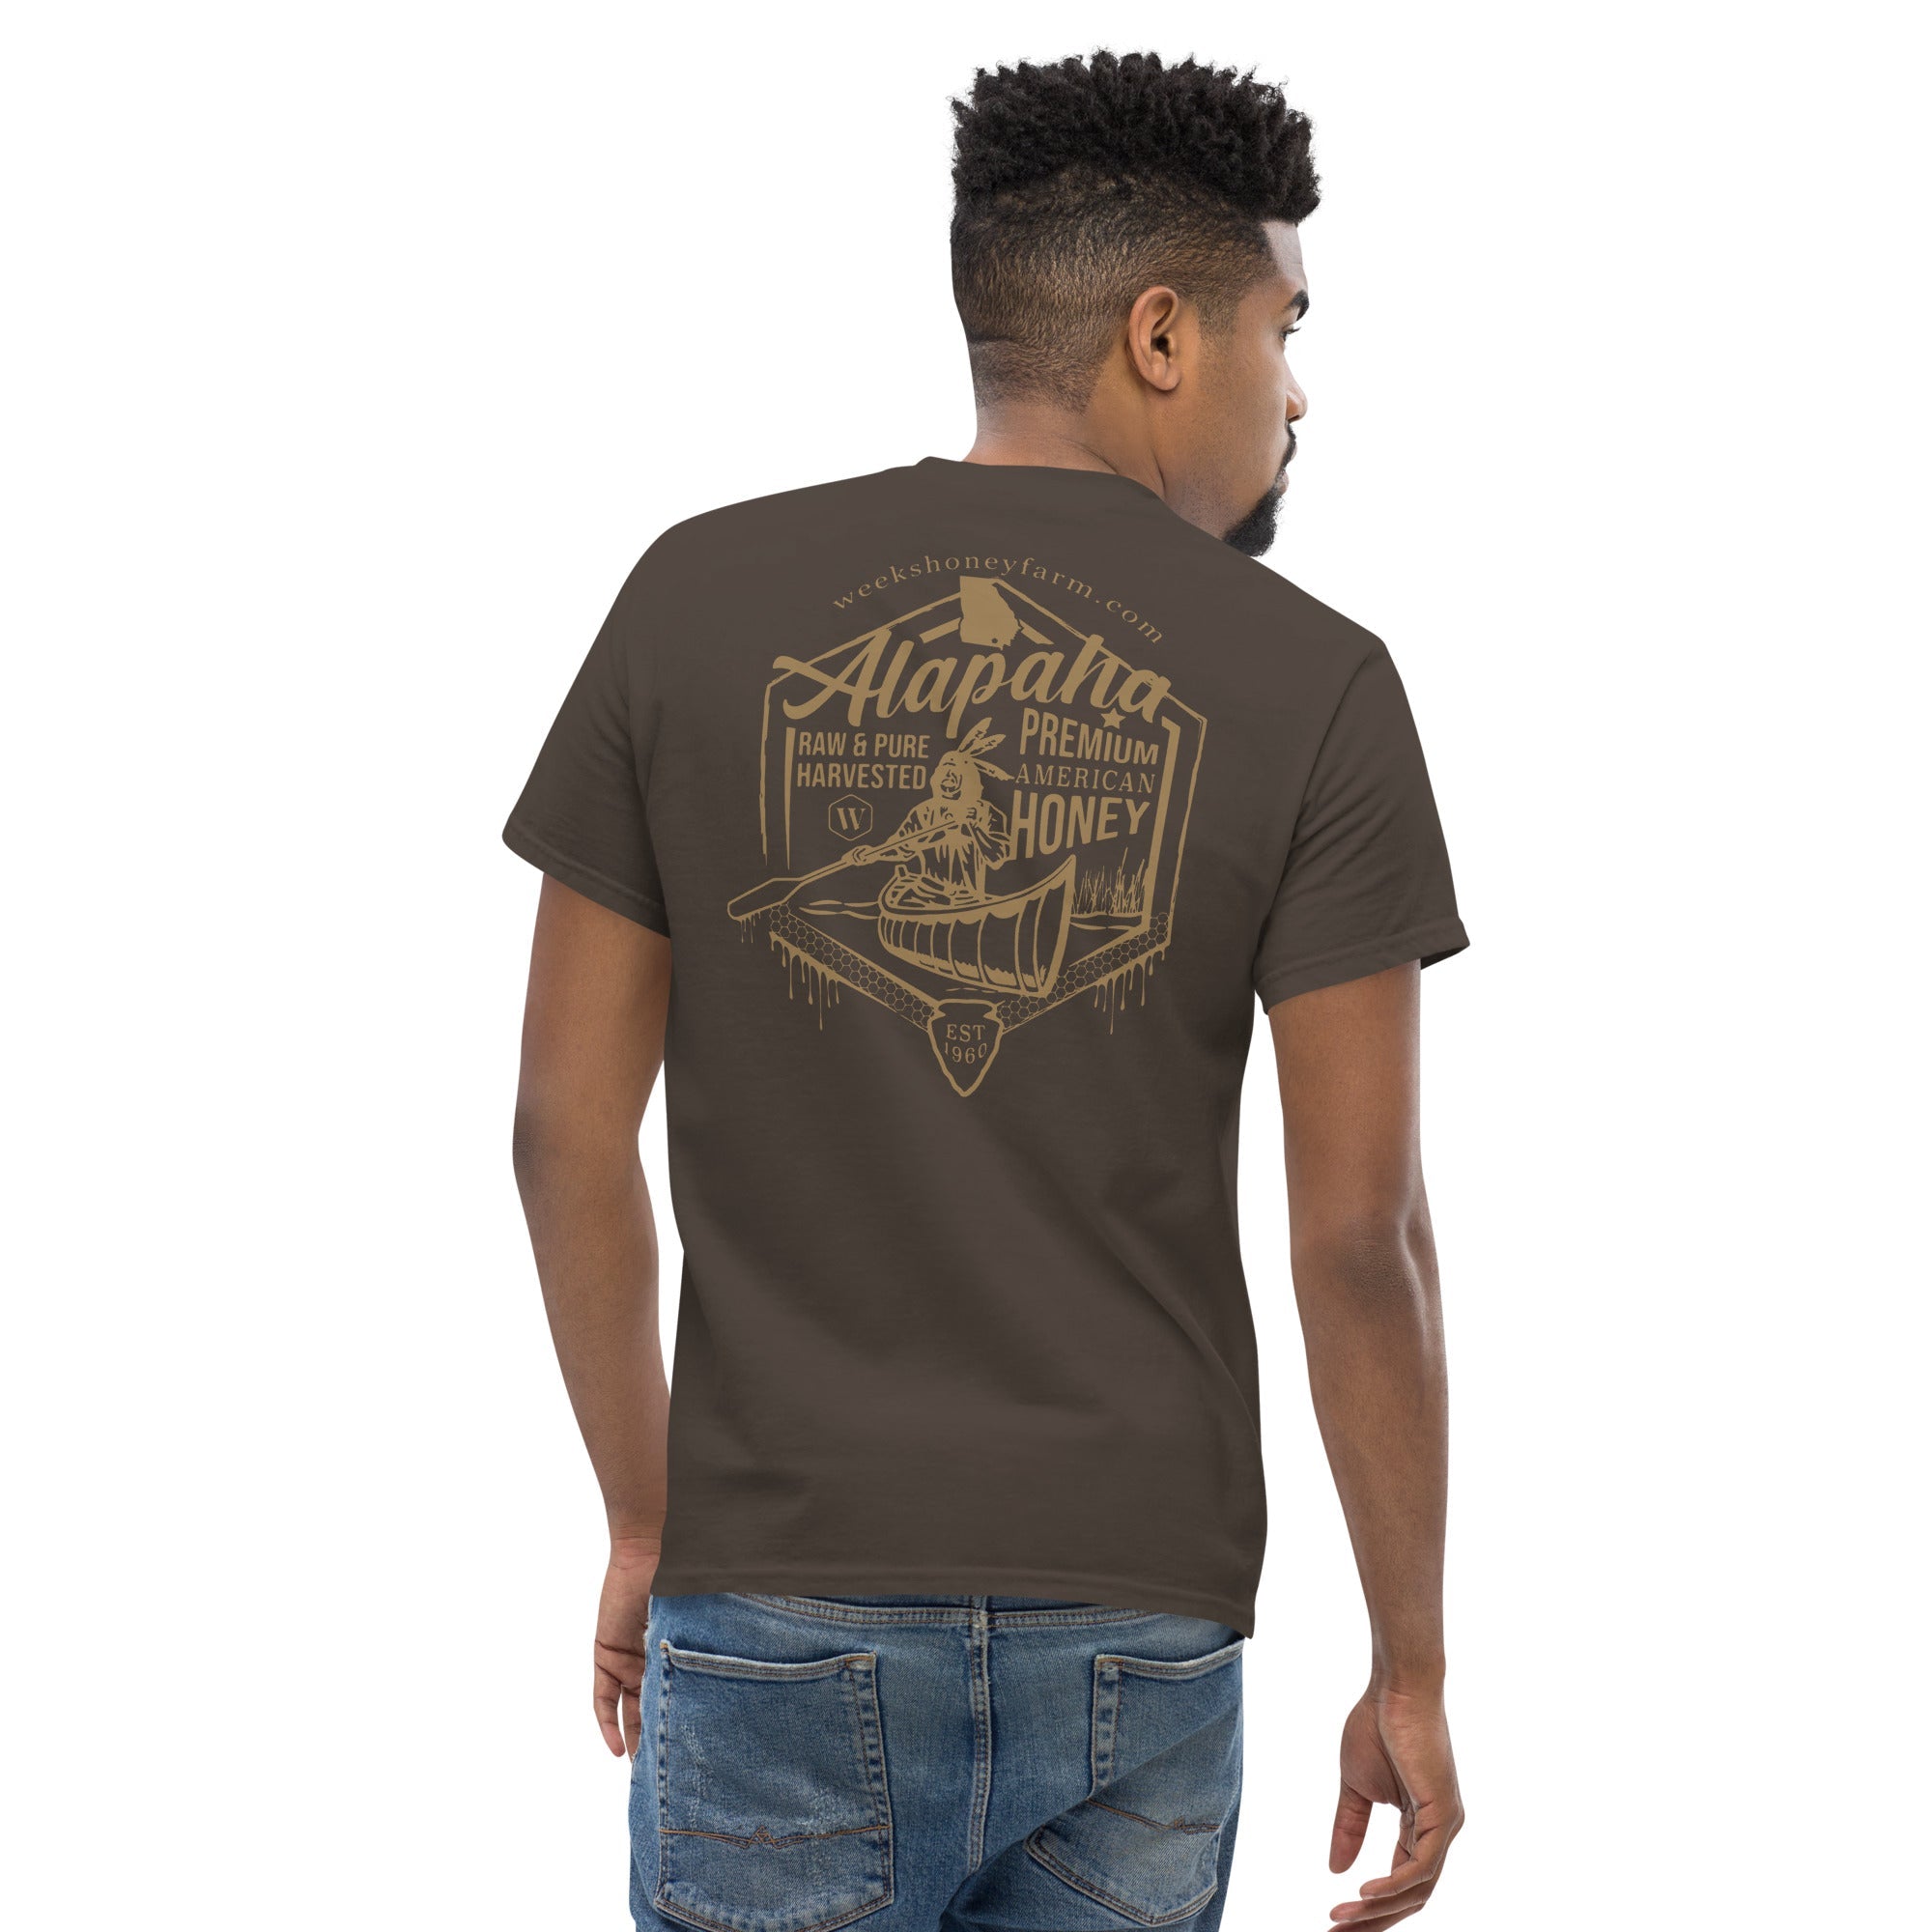 Alapaha Honey Shirt - Premium shirt from Weeks Naturals | Weeks Honey Farm - Just $19.99! Shop now at Weeks Naturals | Weeks Honey Farm